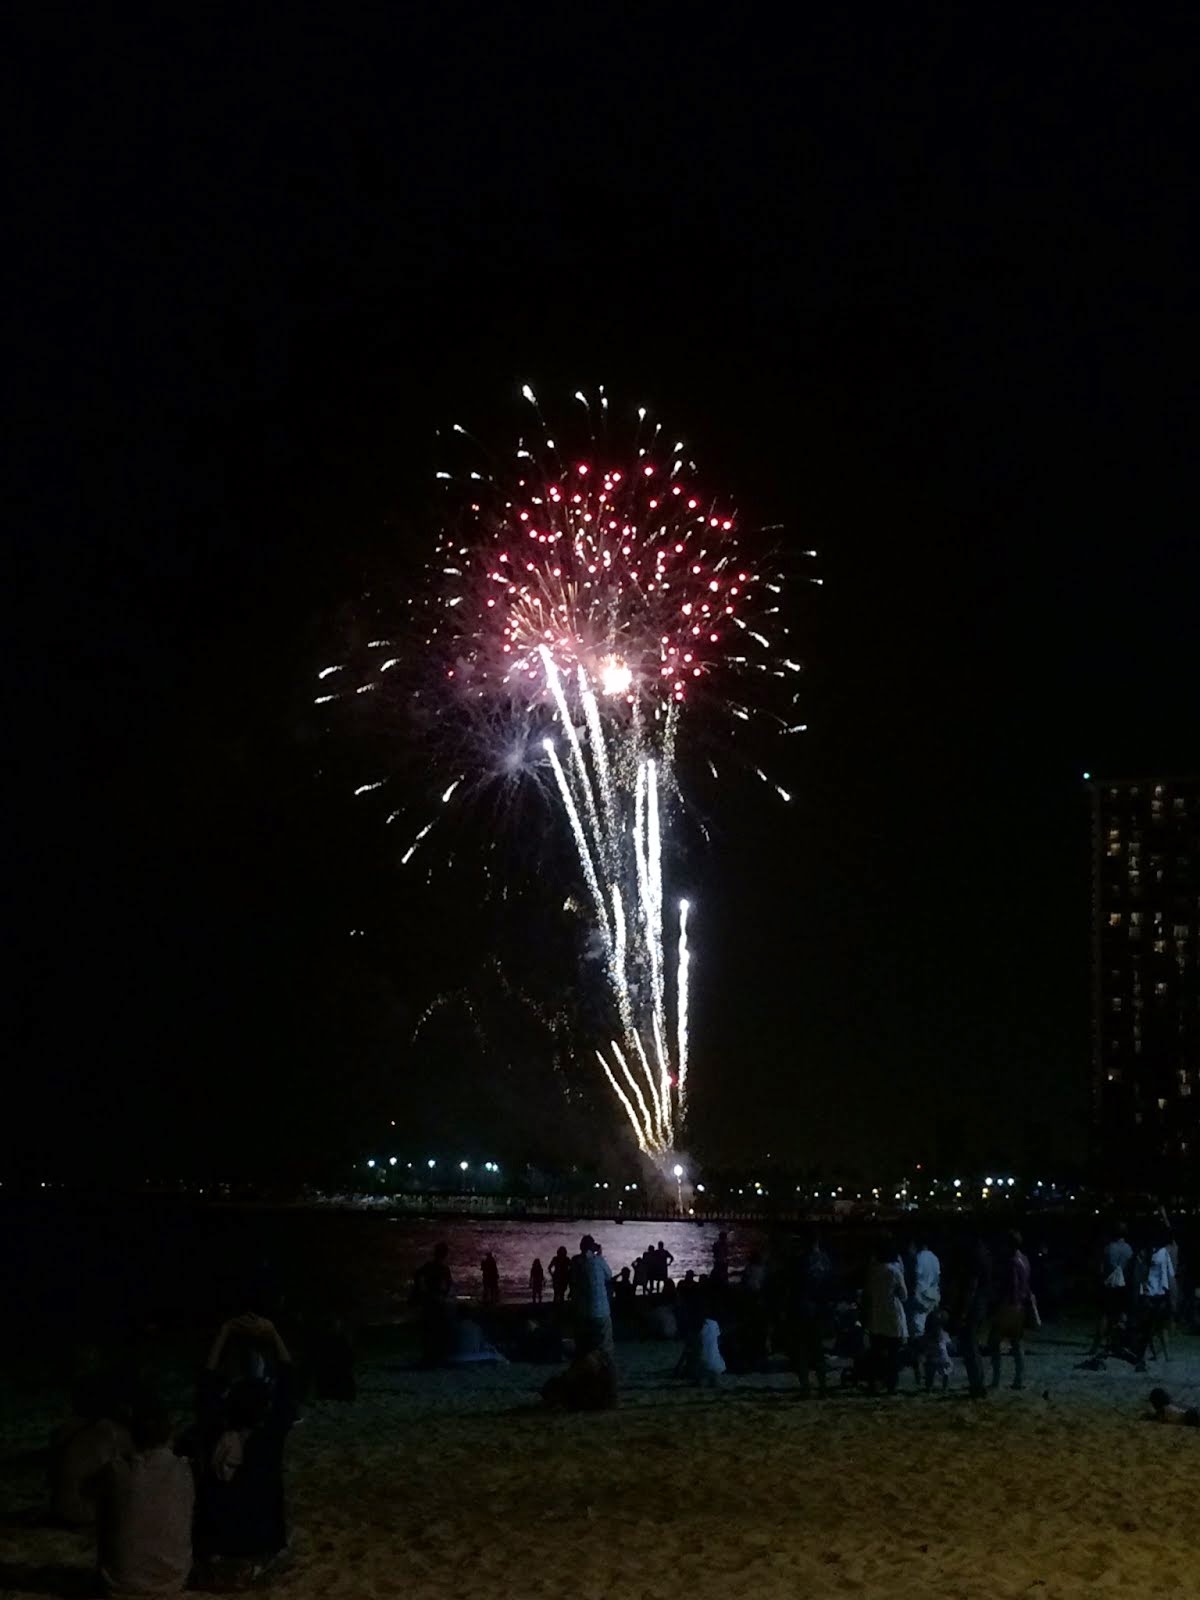 Friday Night Fireworks provided by the Hilton Hawaiian Village